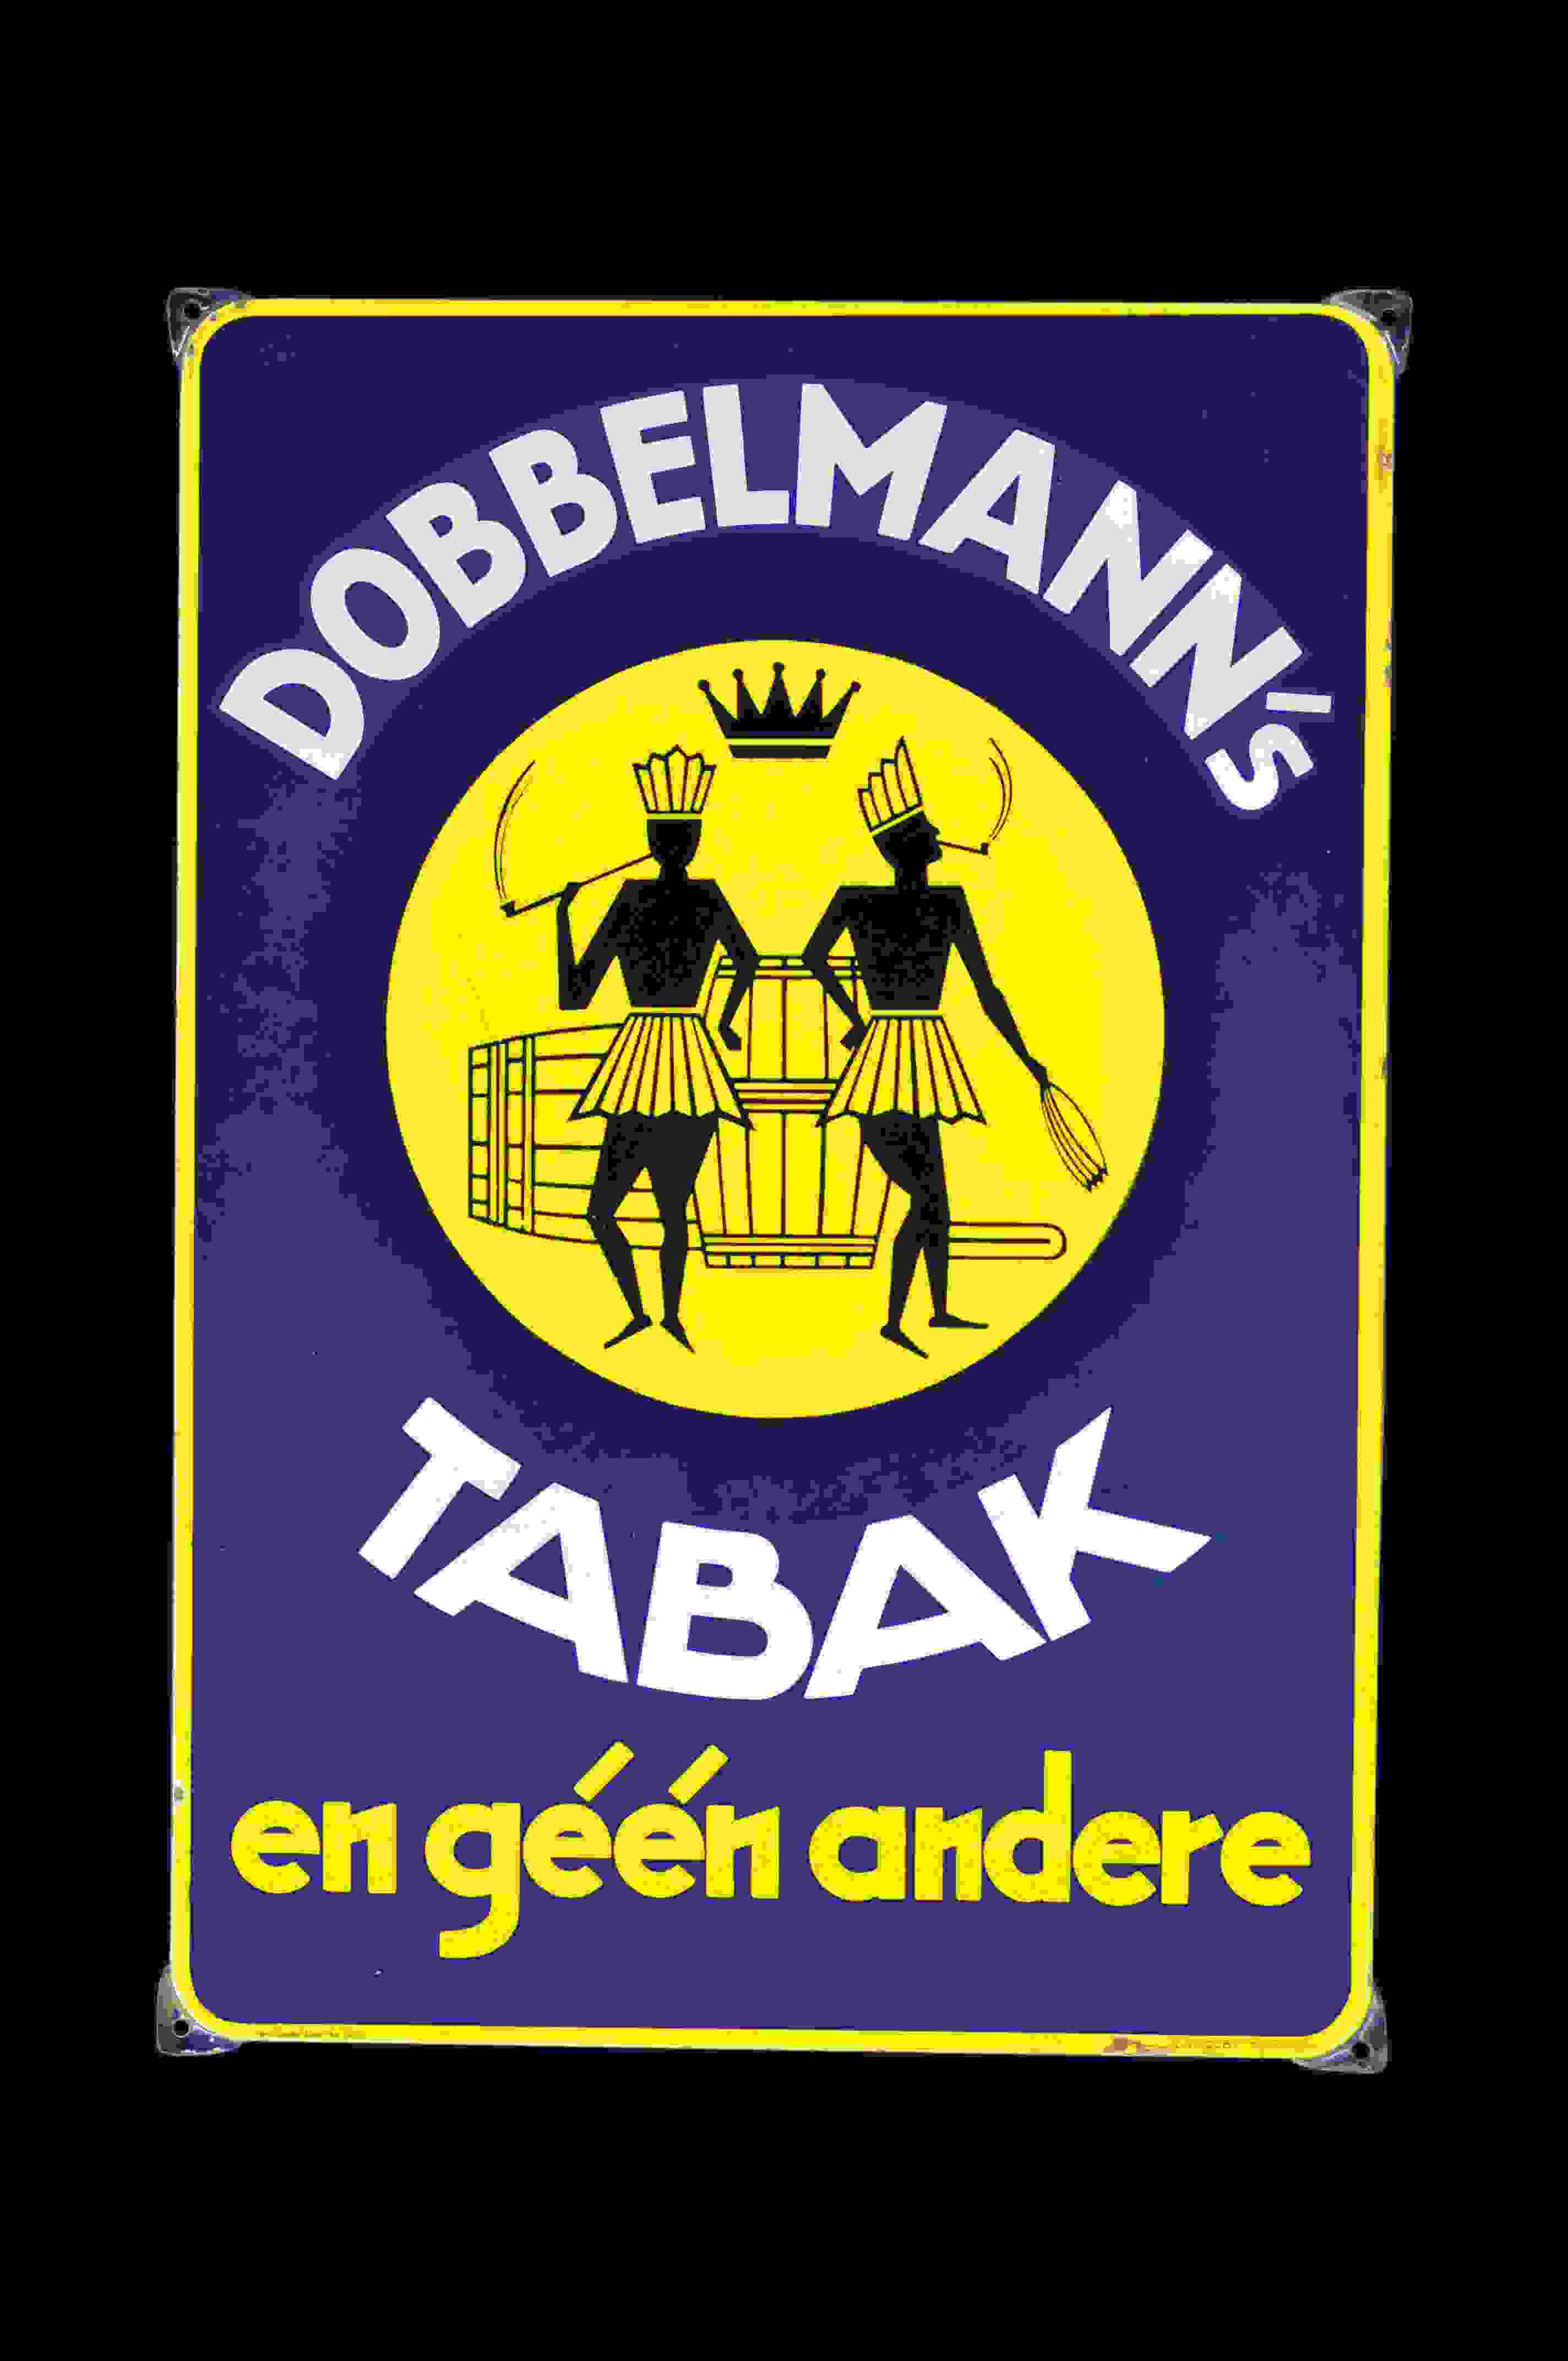 Dobblemann's Tabak 